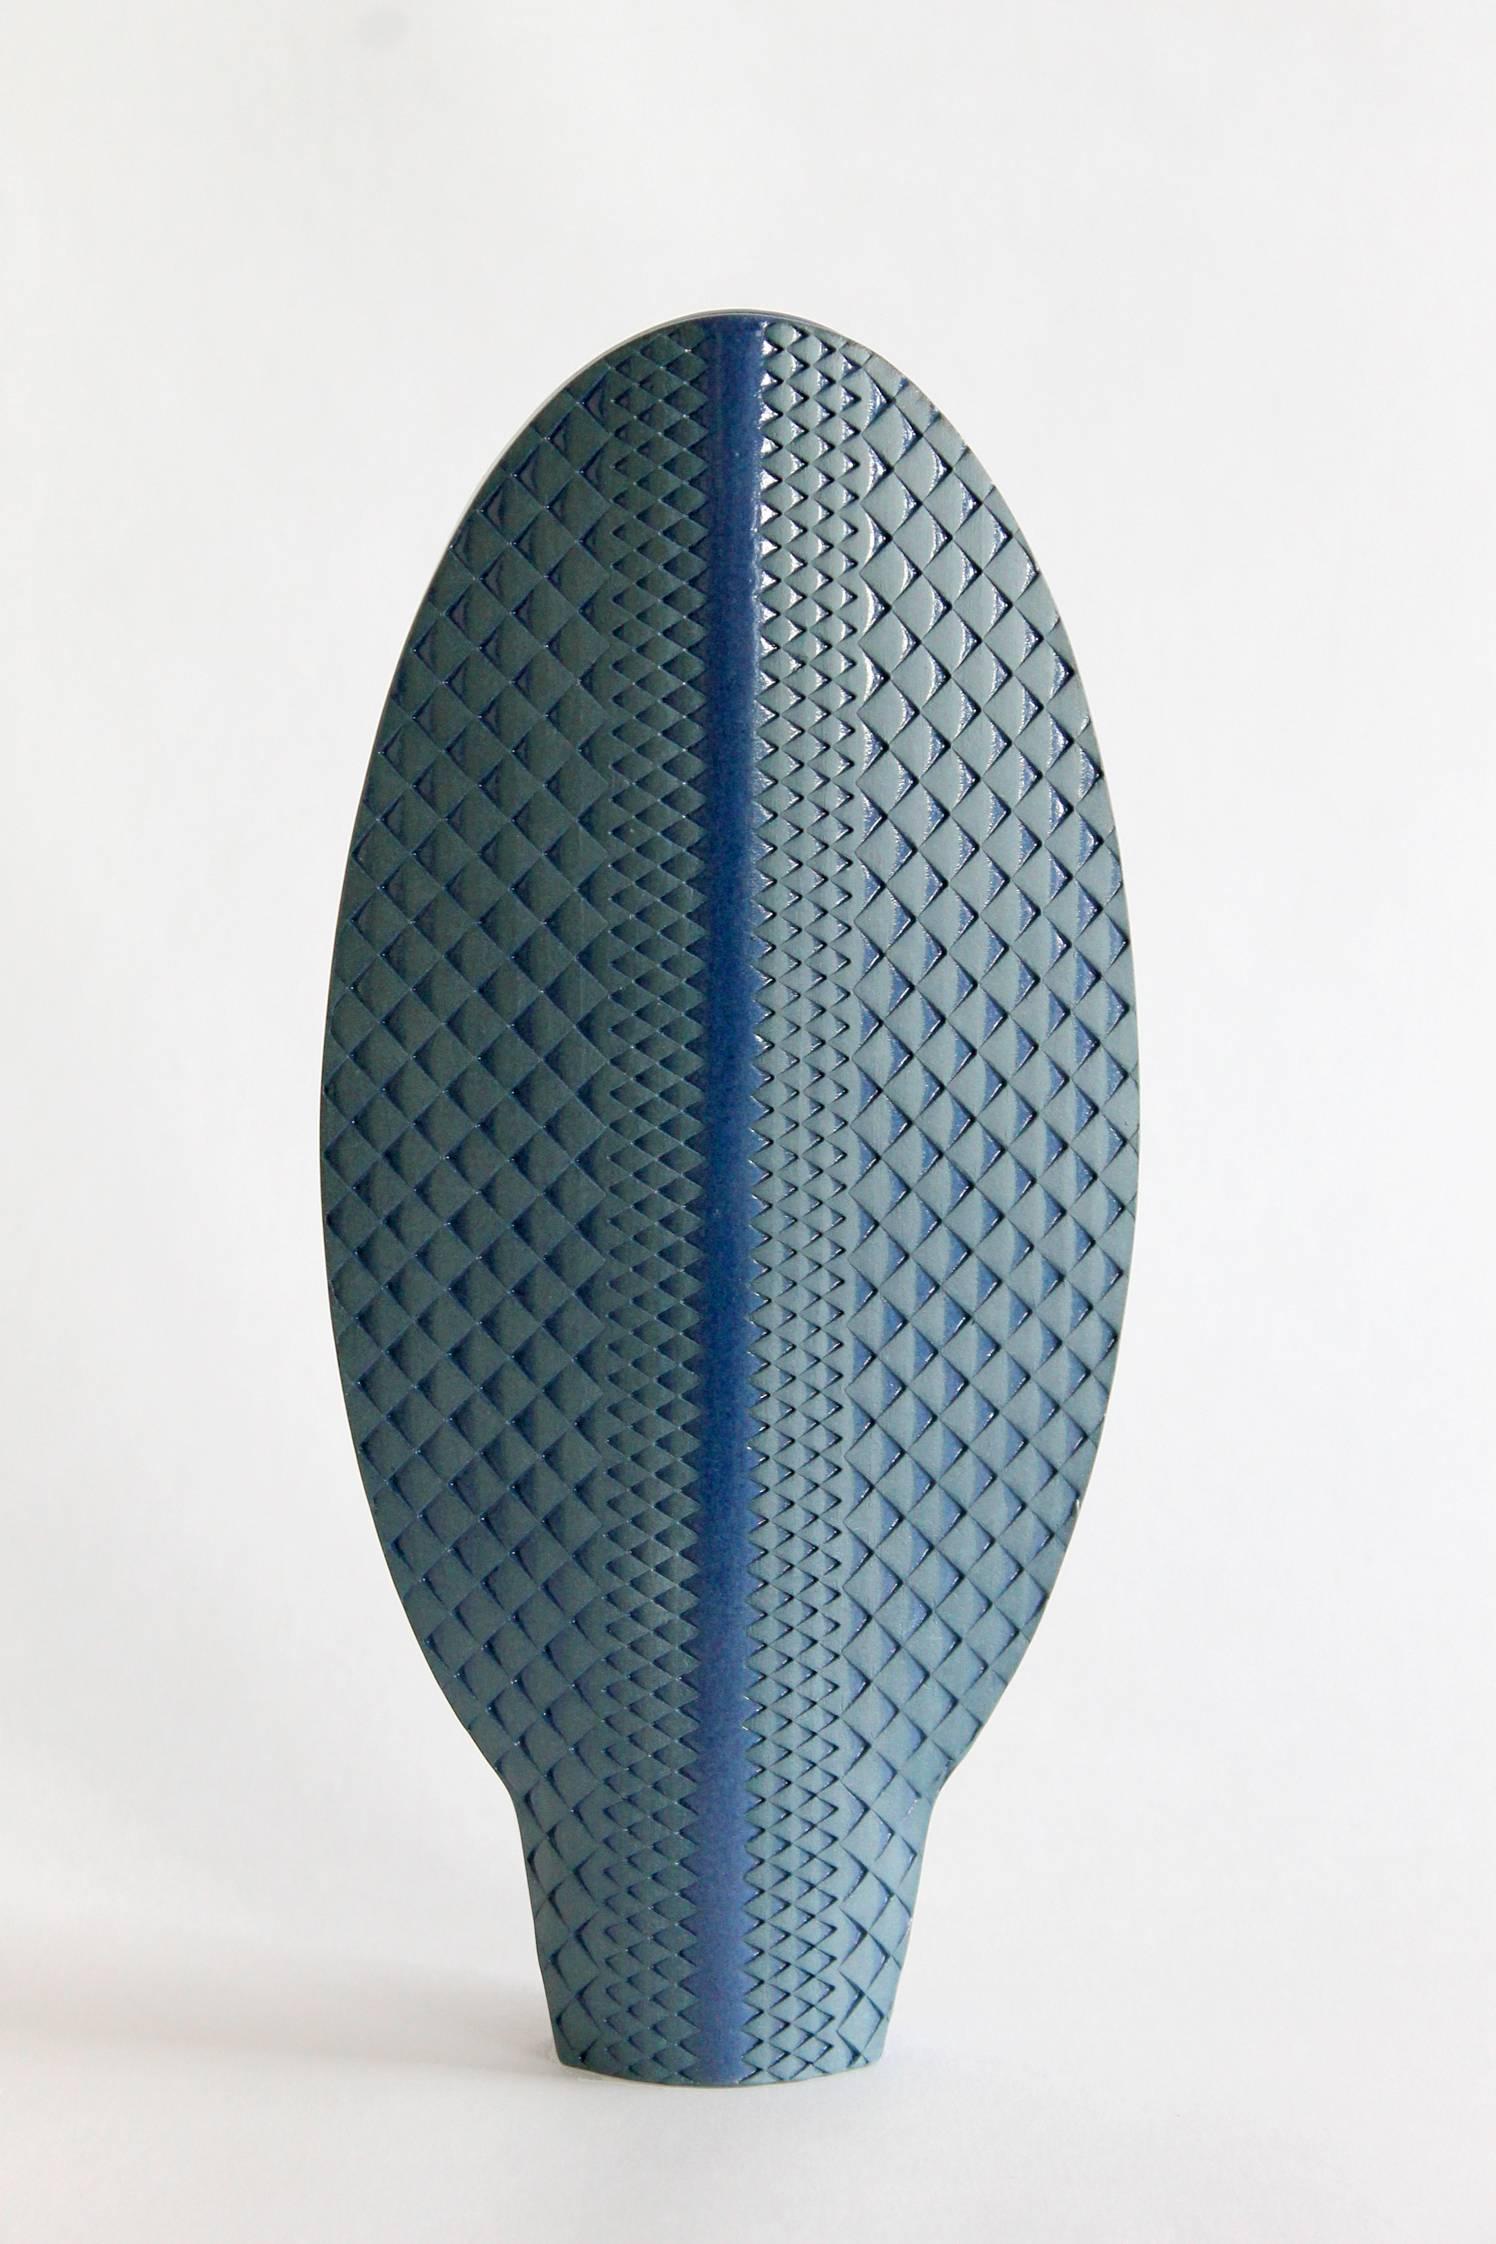 Other Akan K3 by Hélène Morbu, Limited Edition Handmade Ceramic Vase, France For Sale